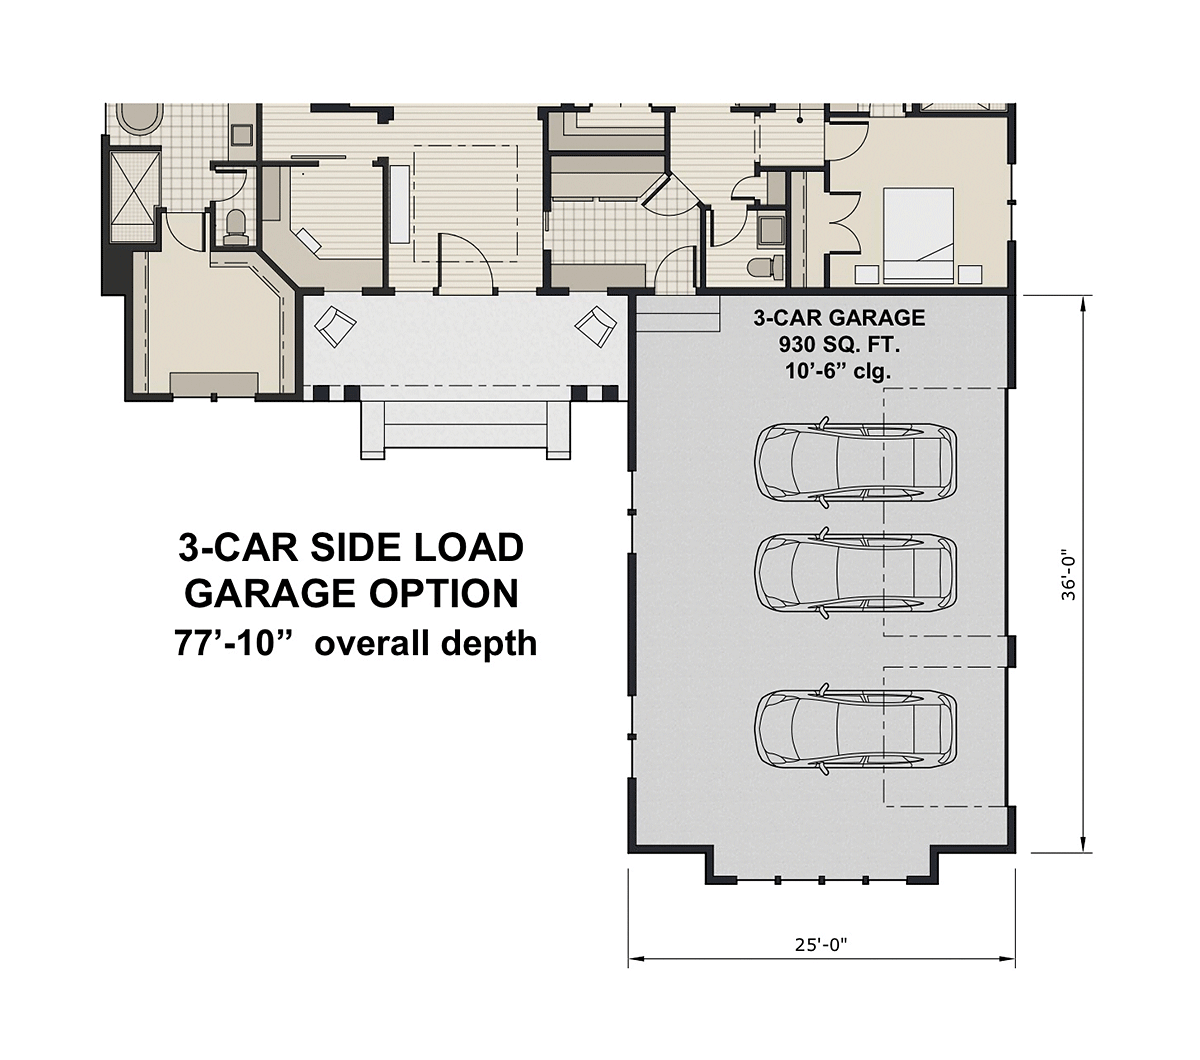 House Plan 41919 Alternate Level One